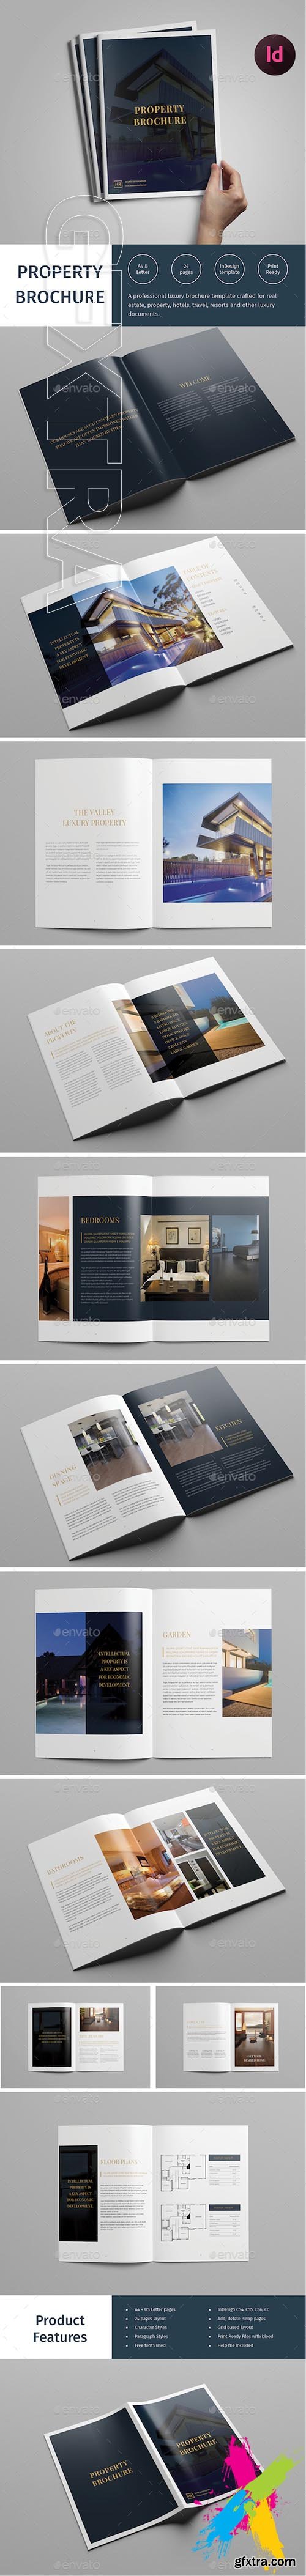 GraphicRiver - Property Brochure 20837613